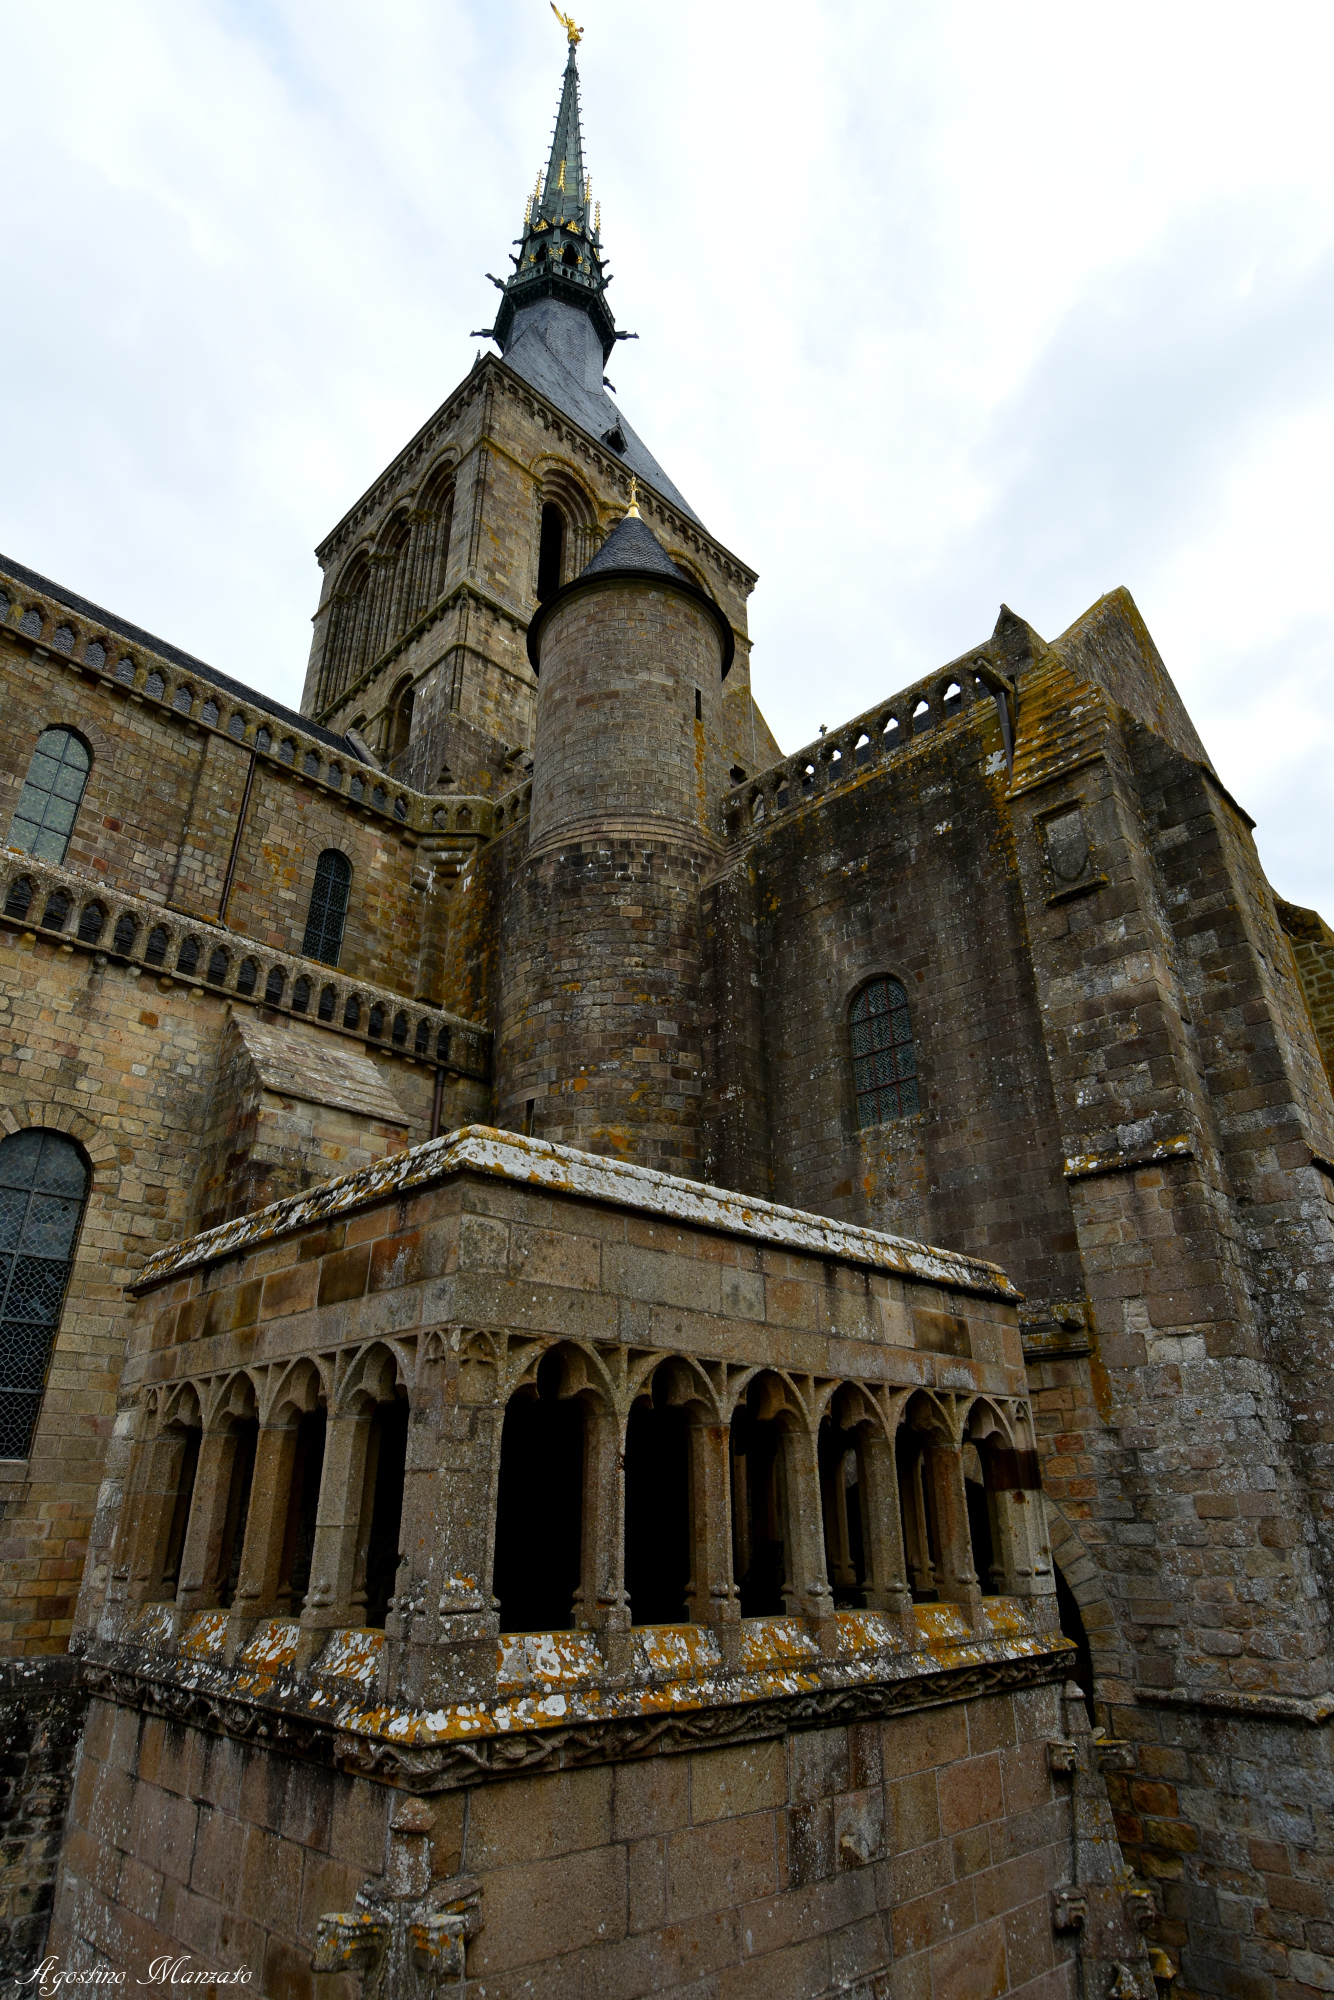 The church of Mont Saint Michel...